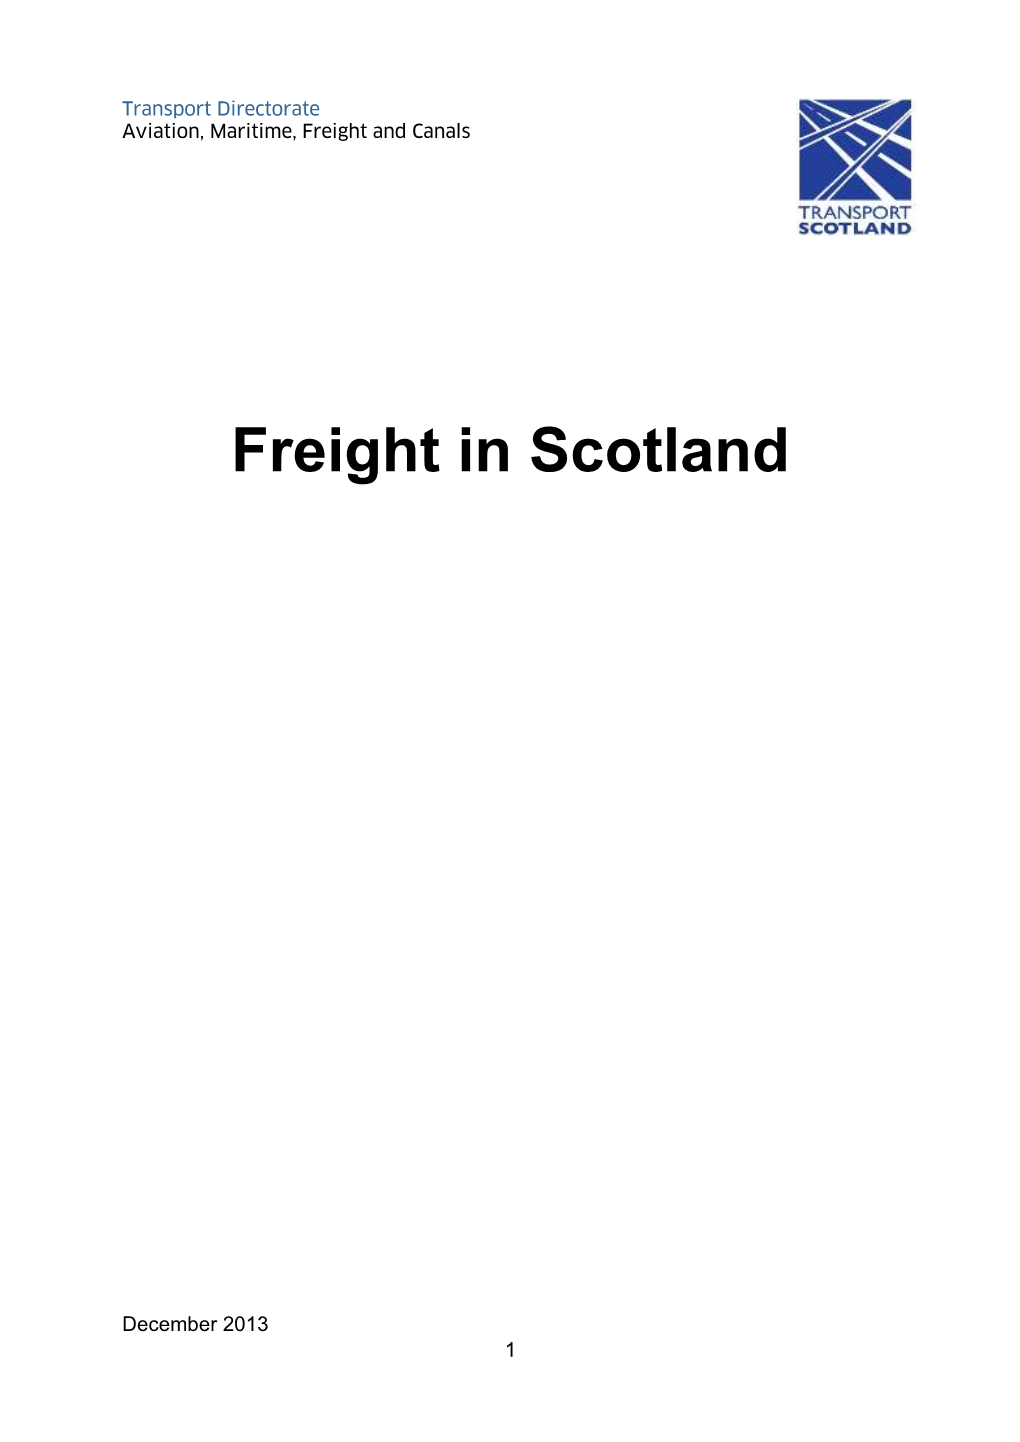 Freight in Scotland